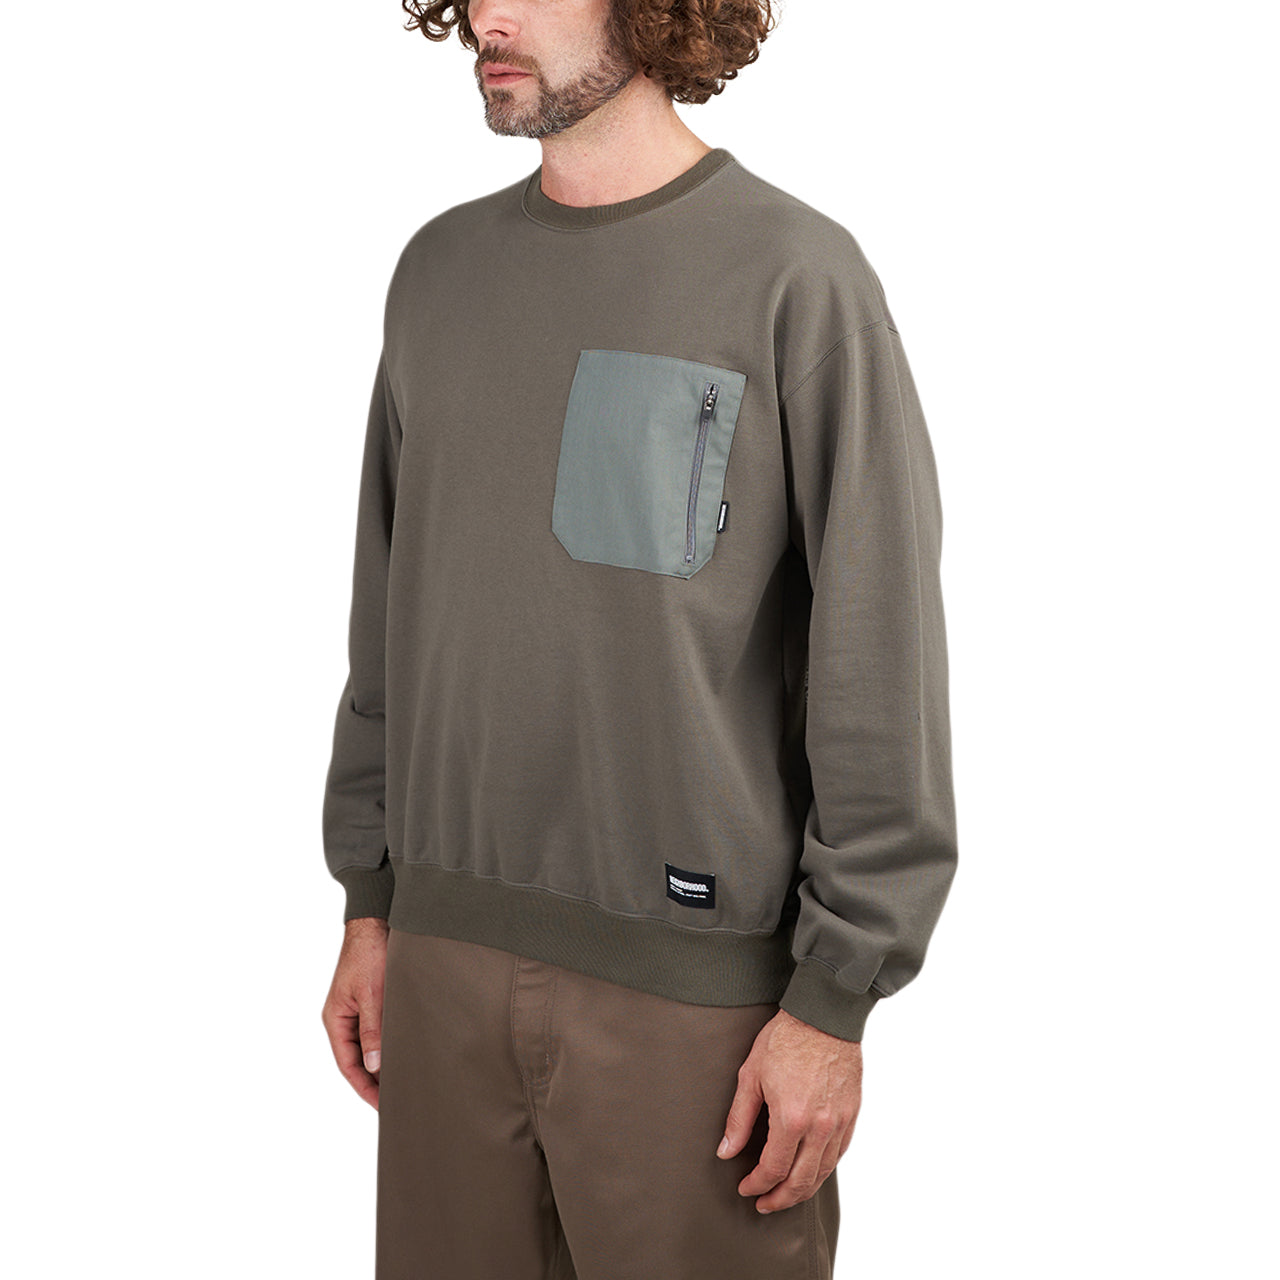 Neighborhood Design Sweatshirt LS-3 (Oliv)  - Allike Store